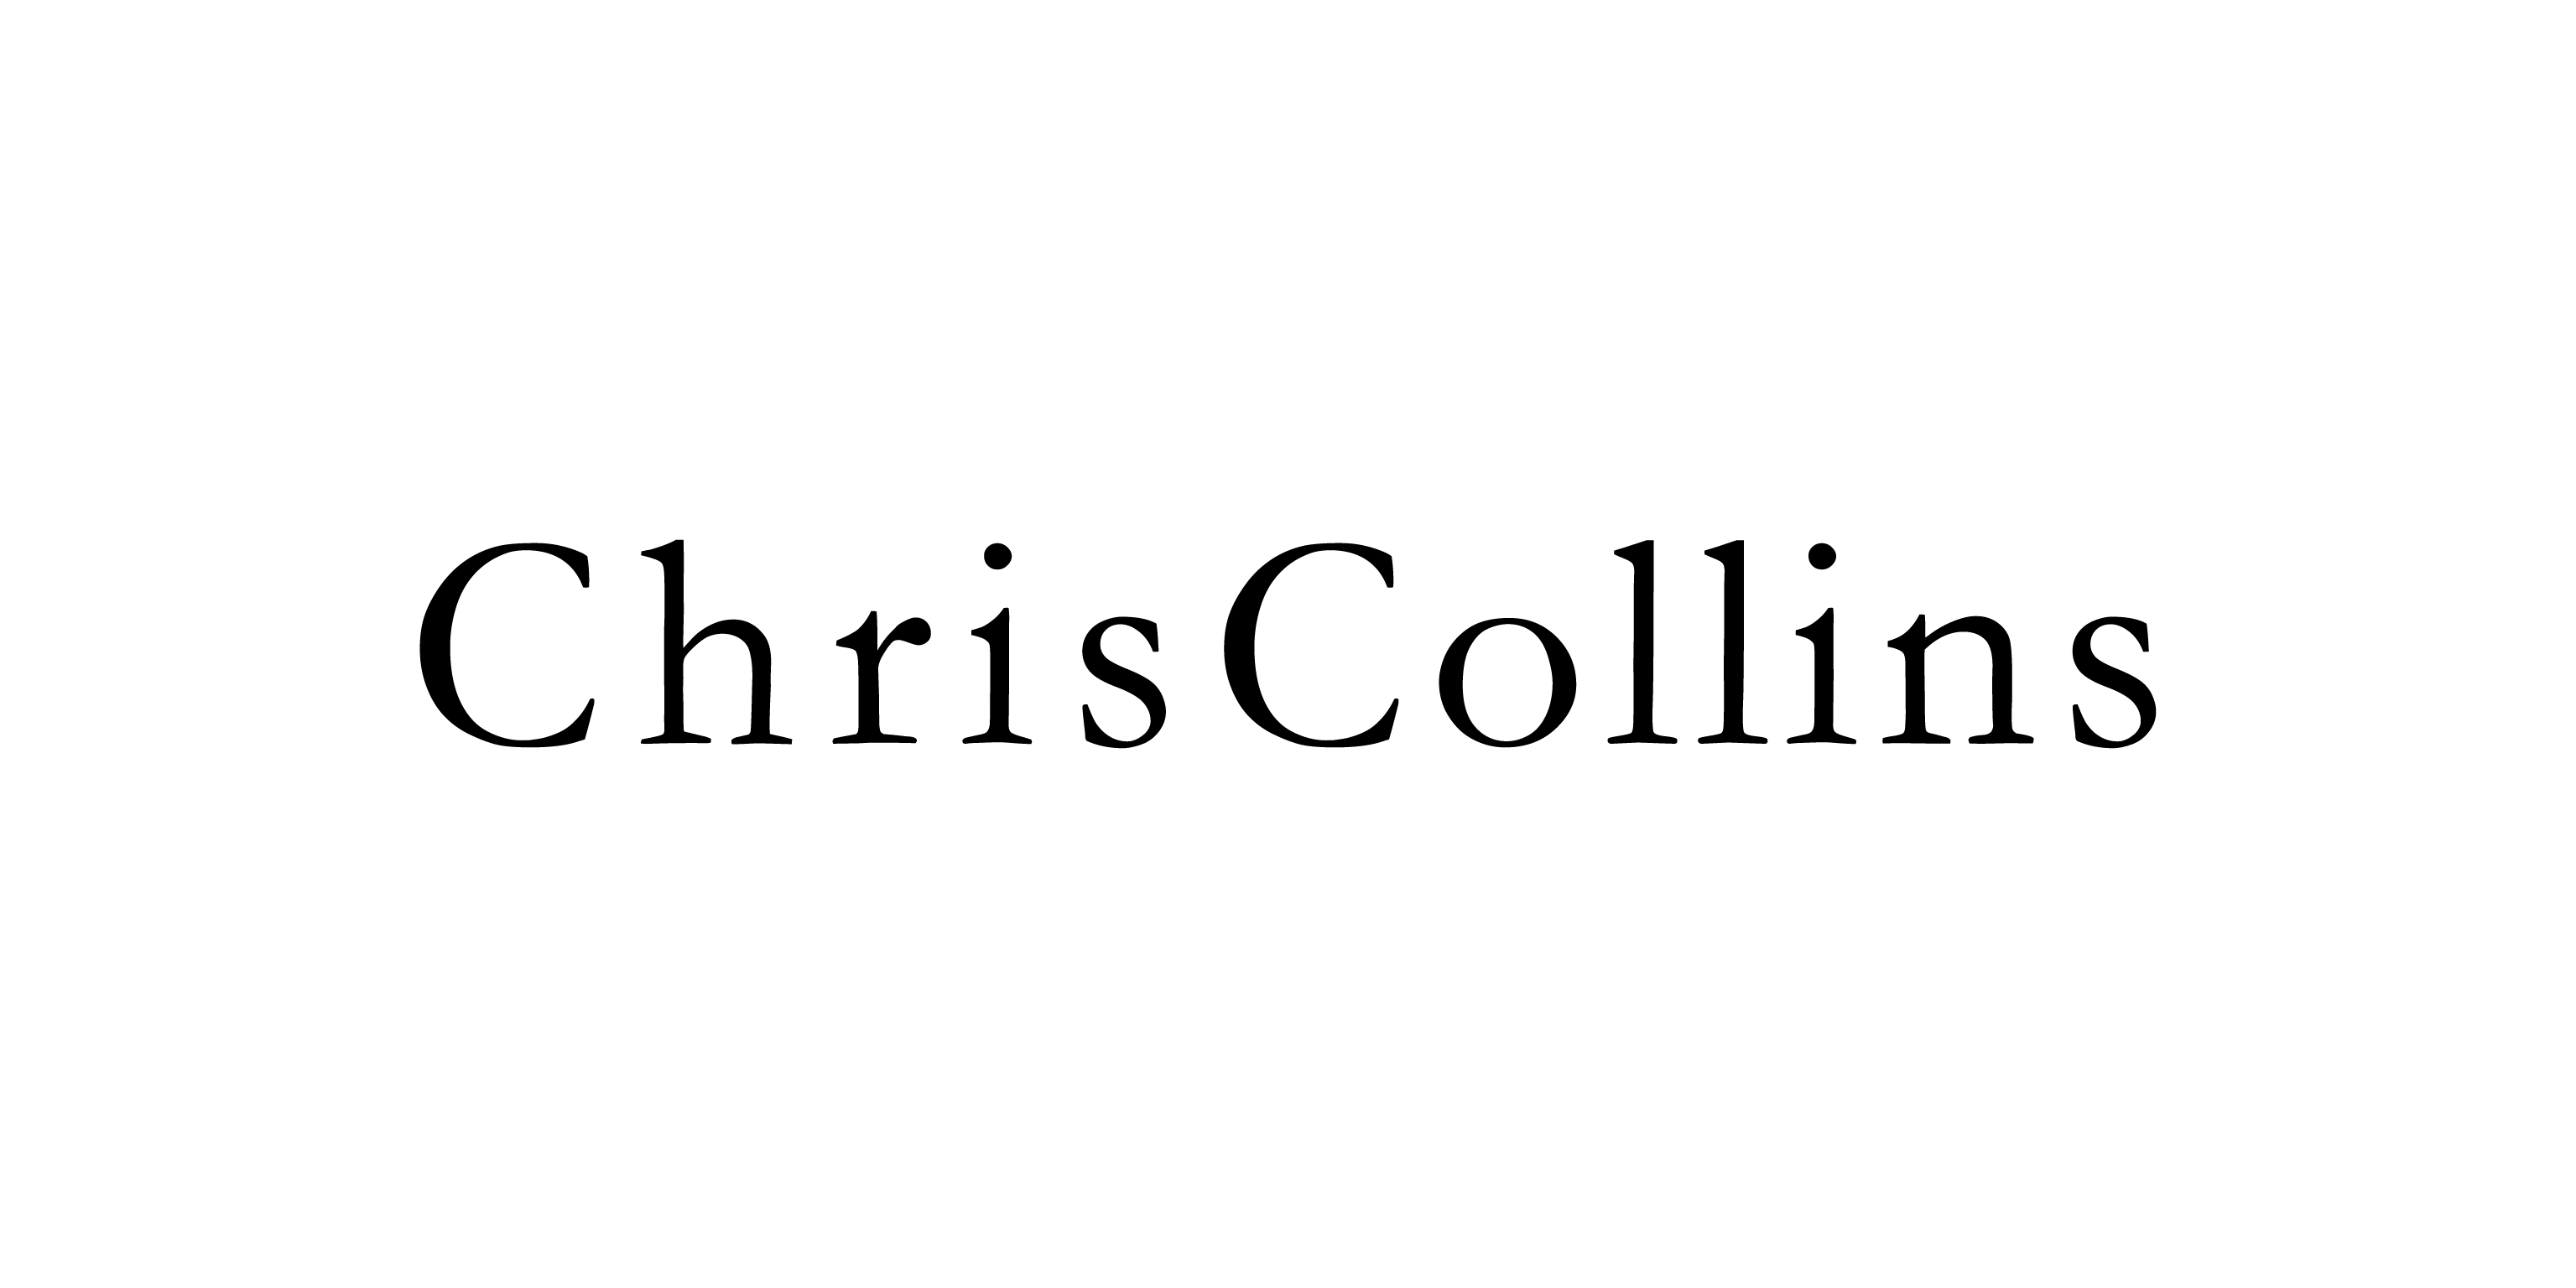 World of Chris Collins